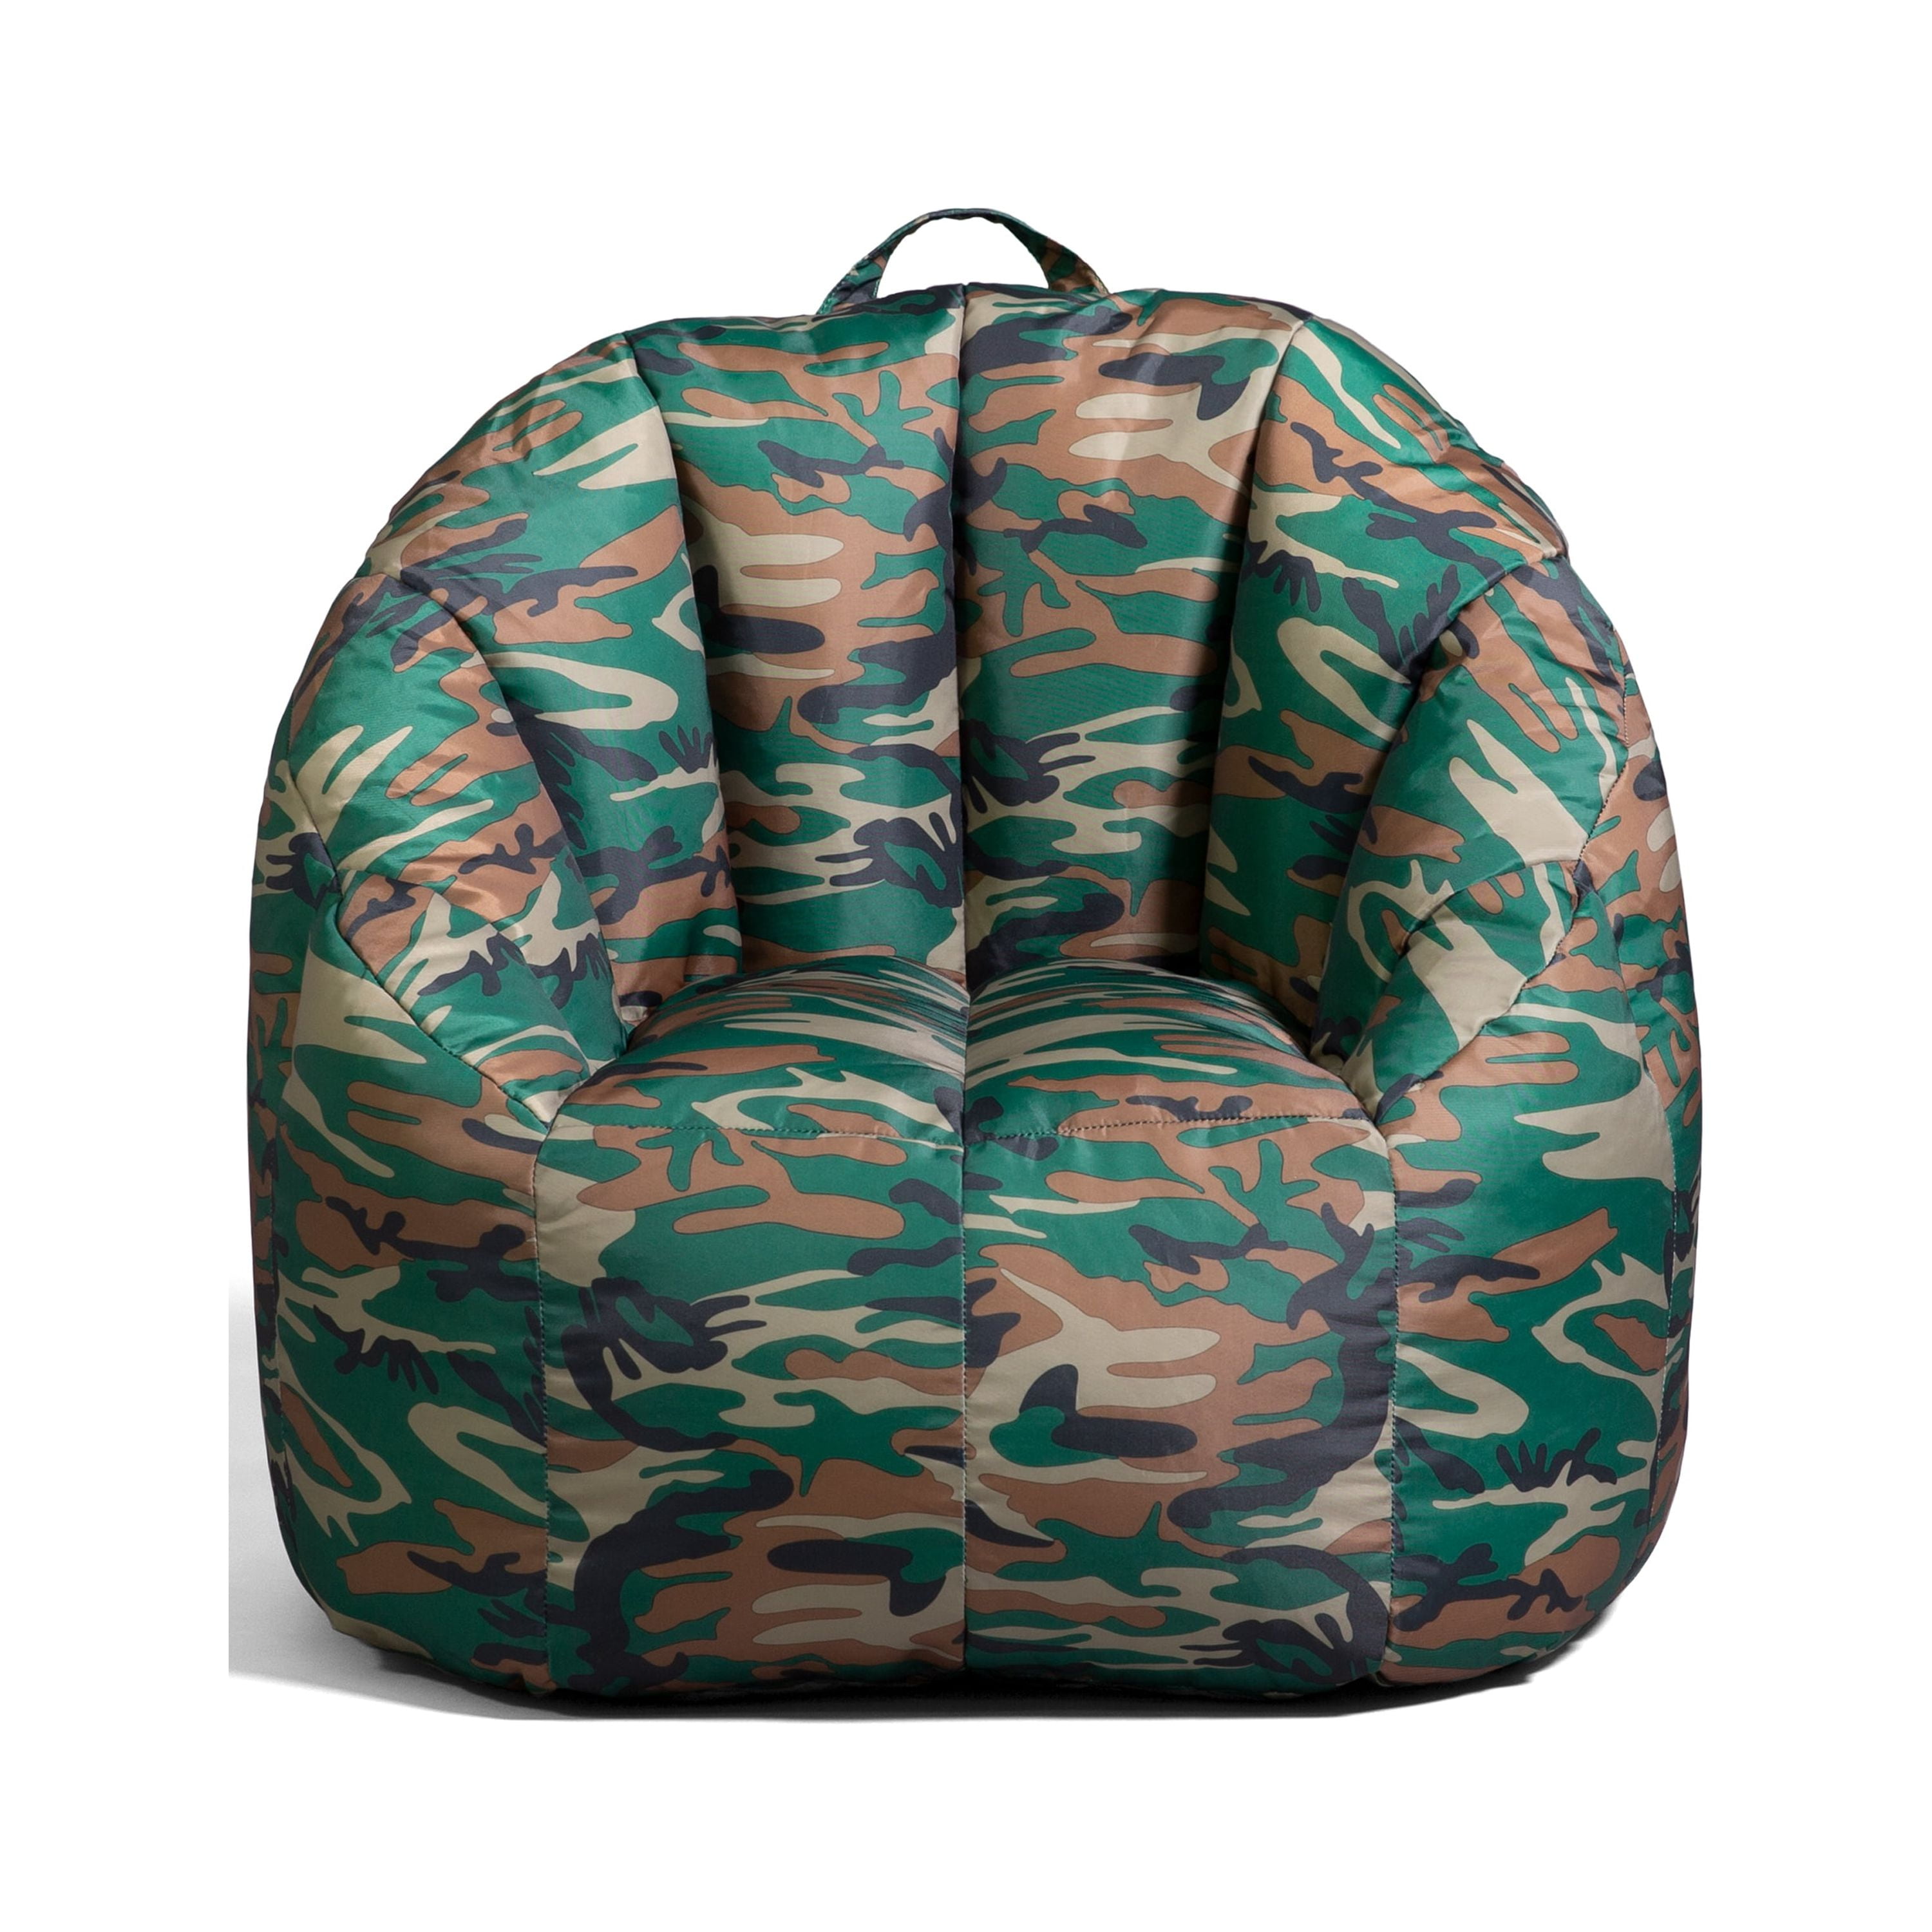 Durable Big Joe Bean Bag Chair for Kids with Guam